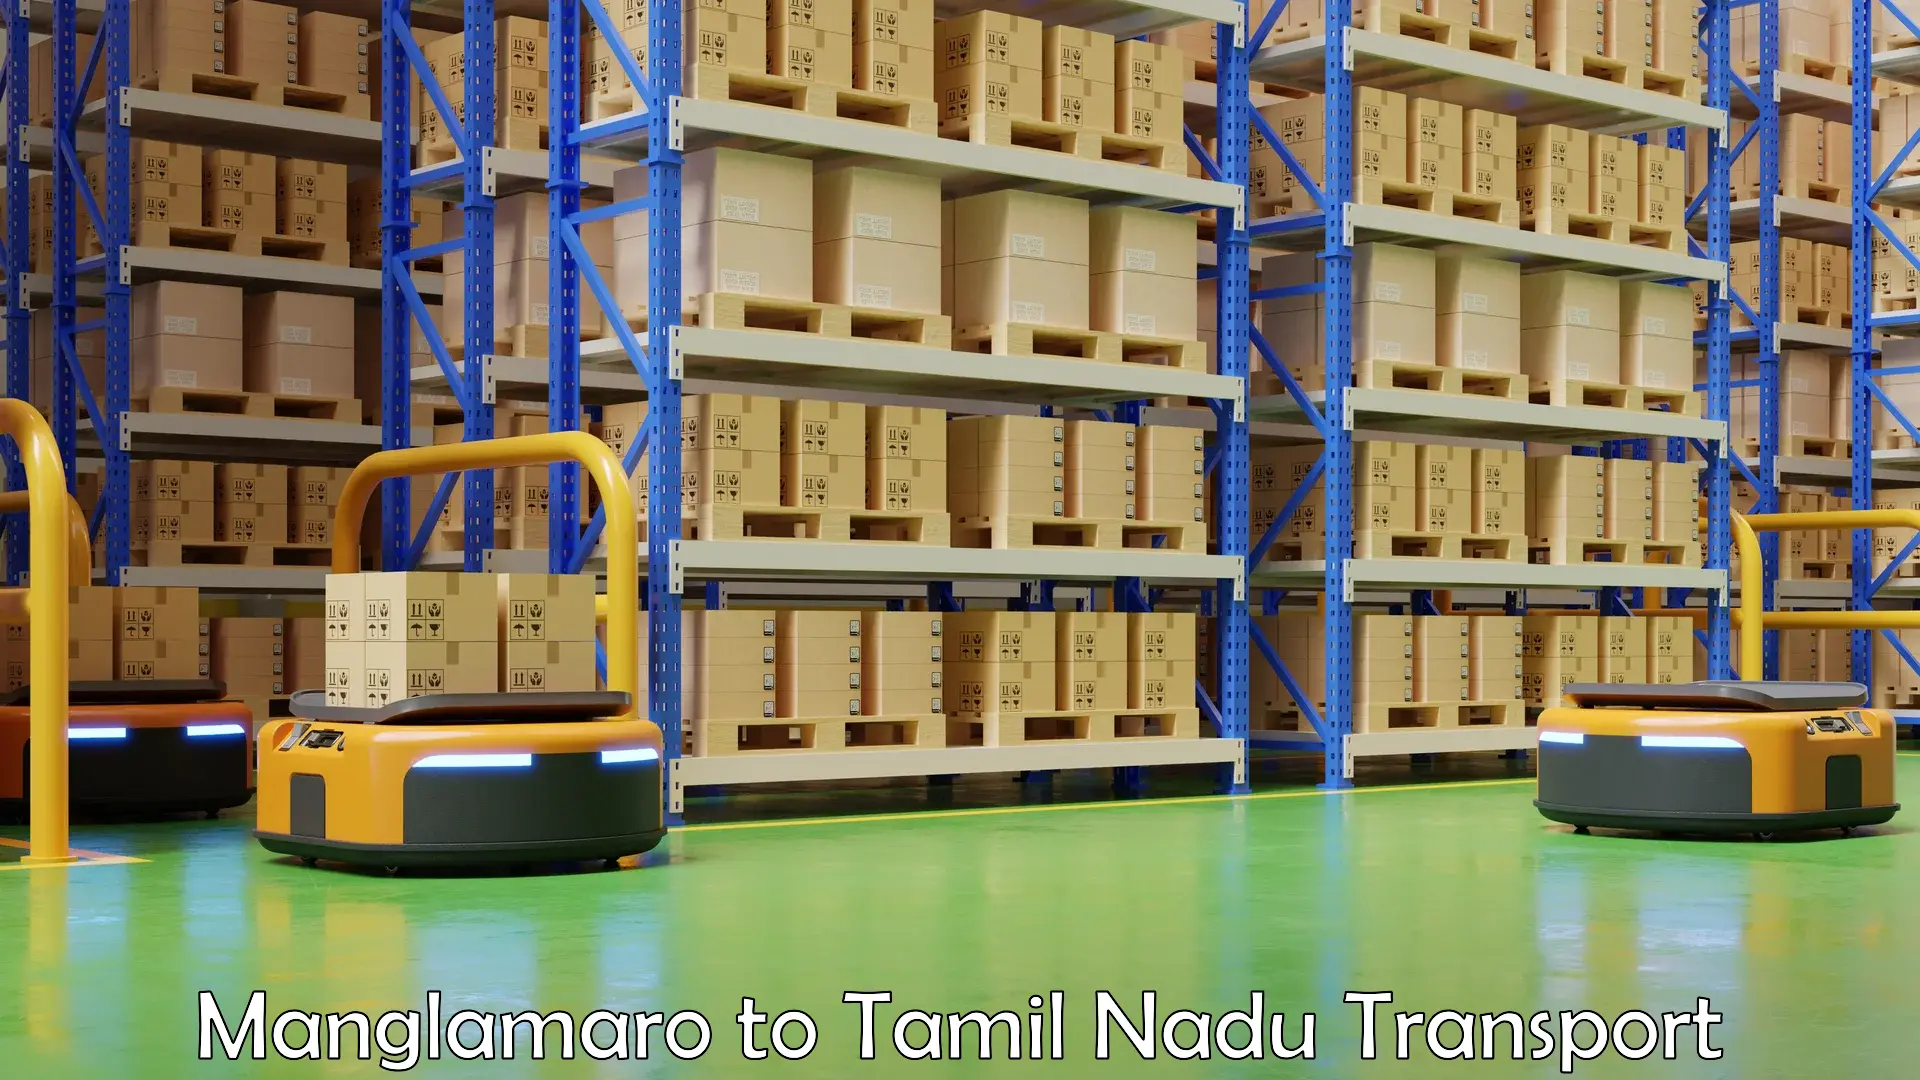 Truck transport companies in India Manglamaro to Tamil Nadu